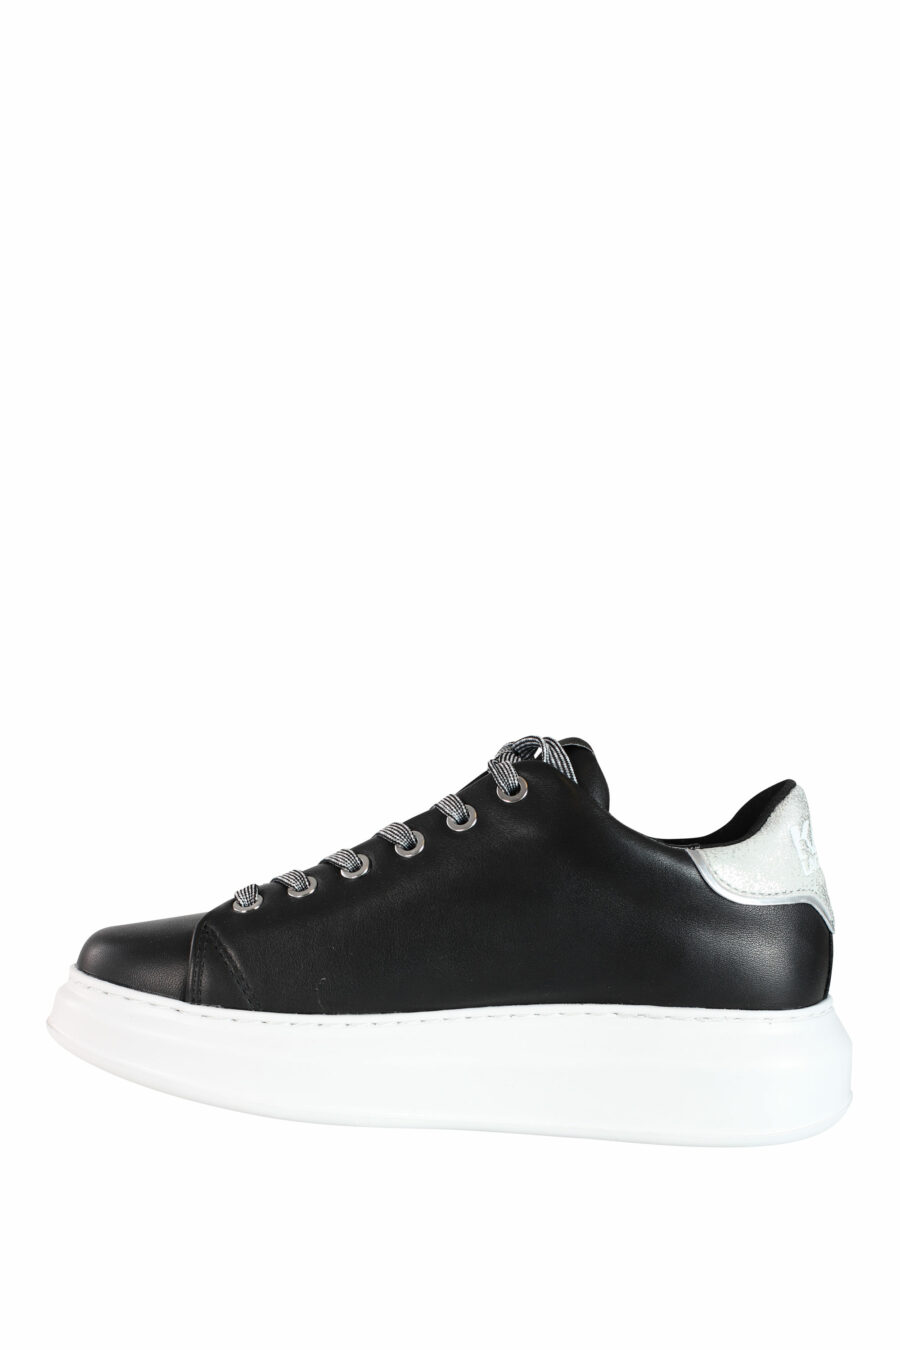 Zapatillas negras con detalles plateado y logo lettering "rue st guillaume" - IMG 3571